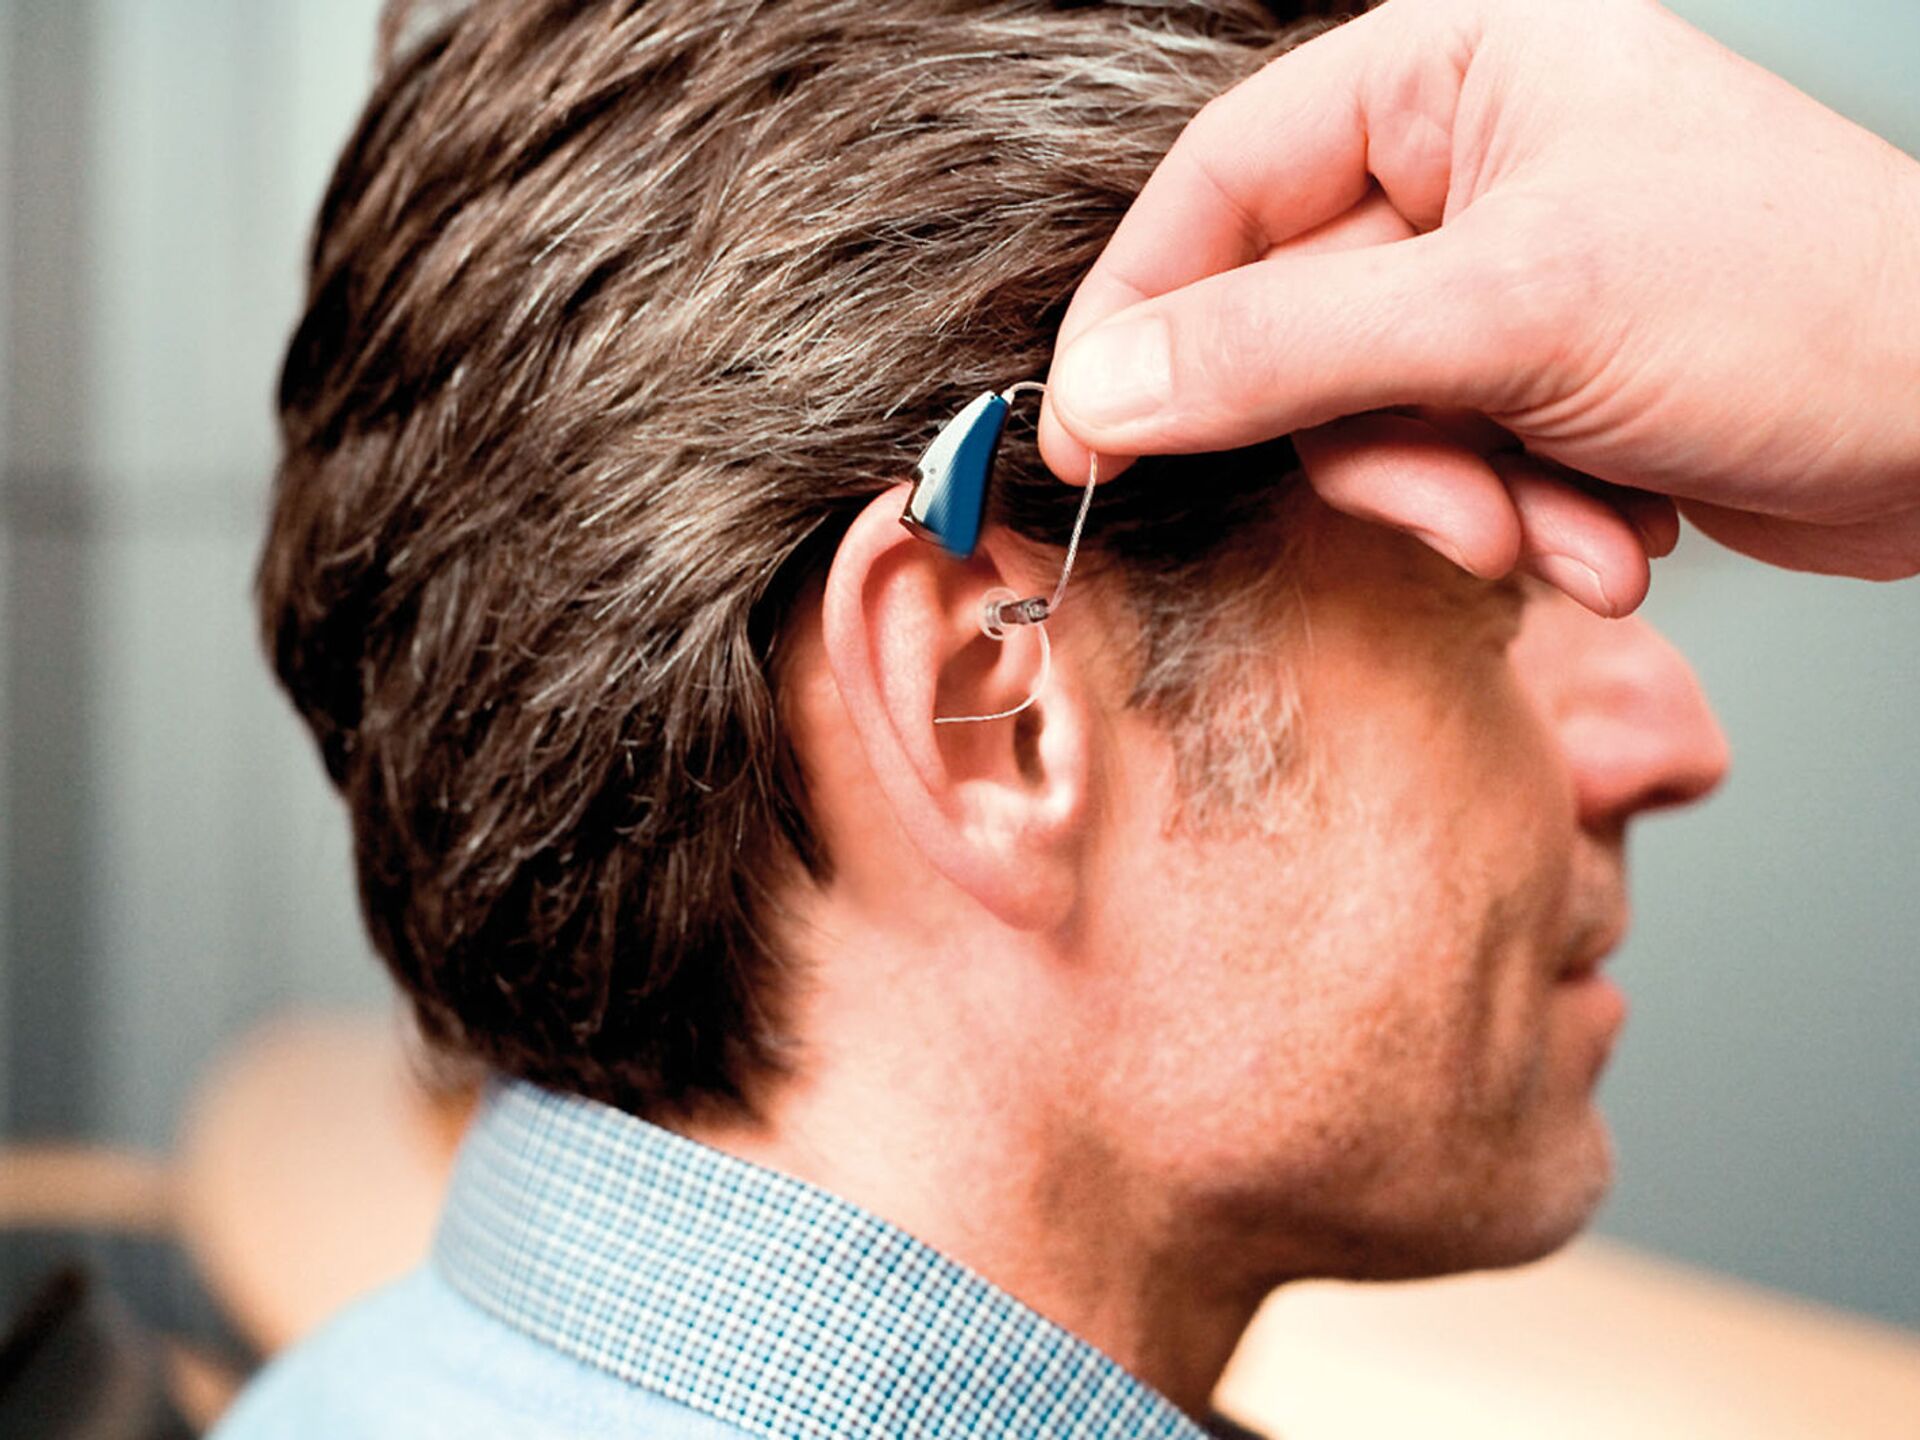 Глухота аномалия. Слуховой аппарат. Нарушение слуха. Слуховой аппарат человека. Аппарат для слуха.